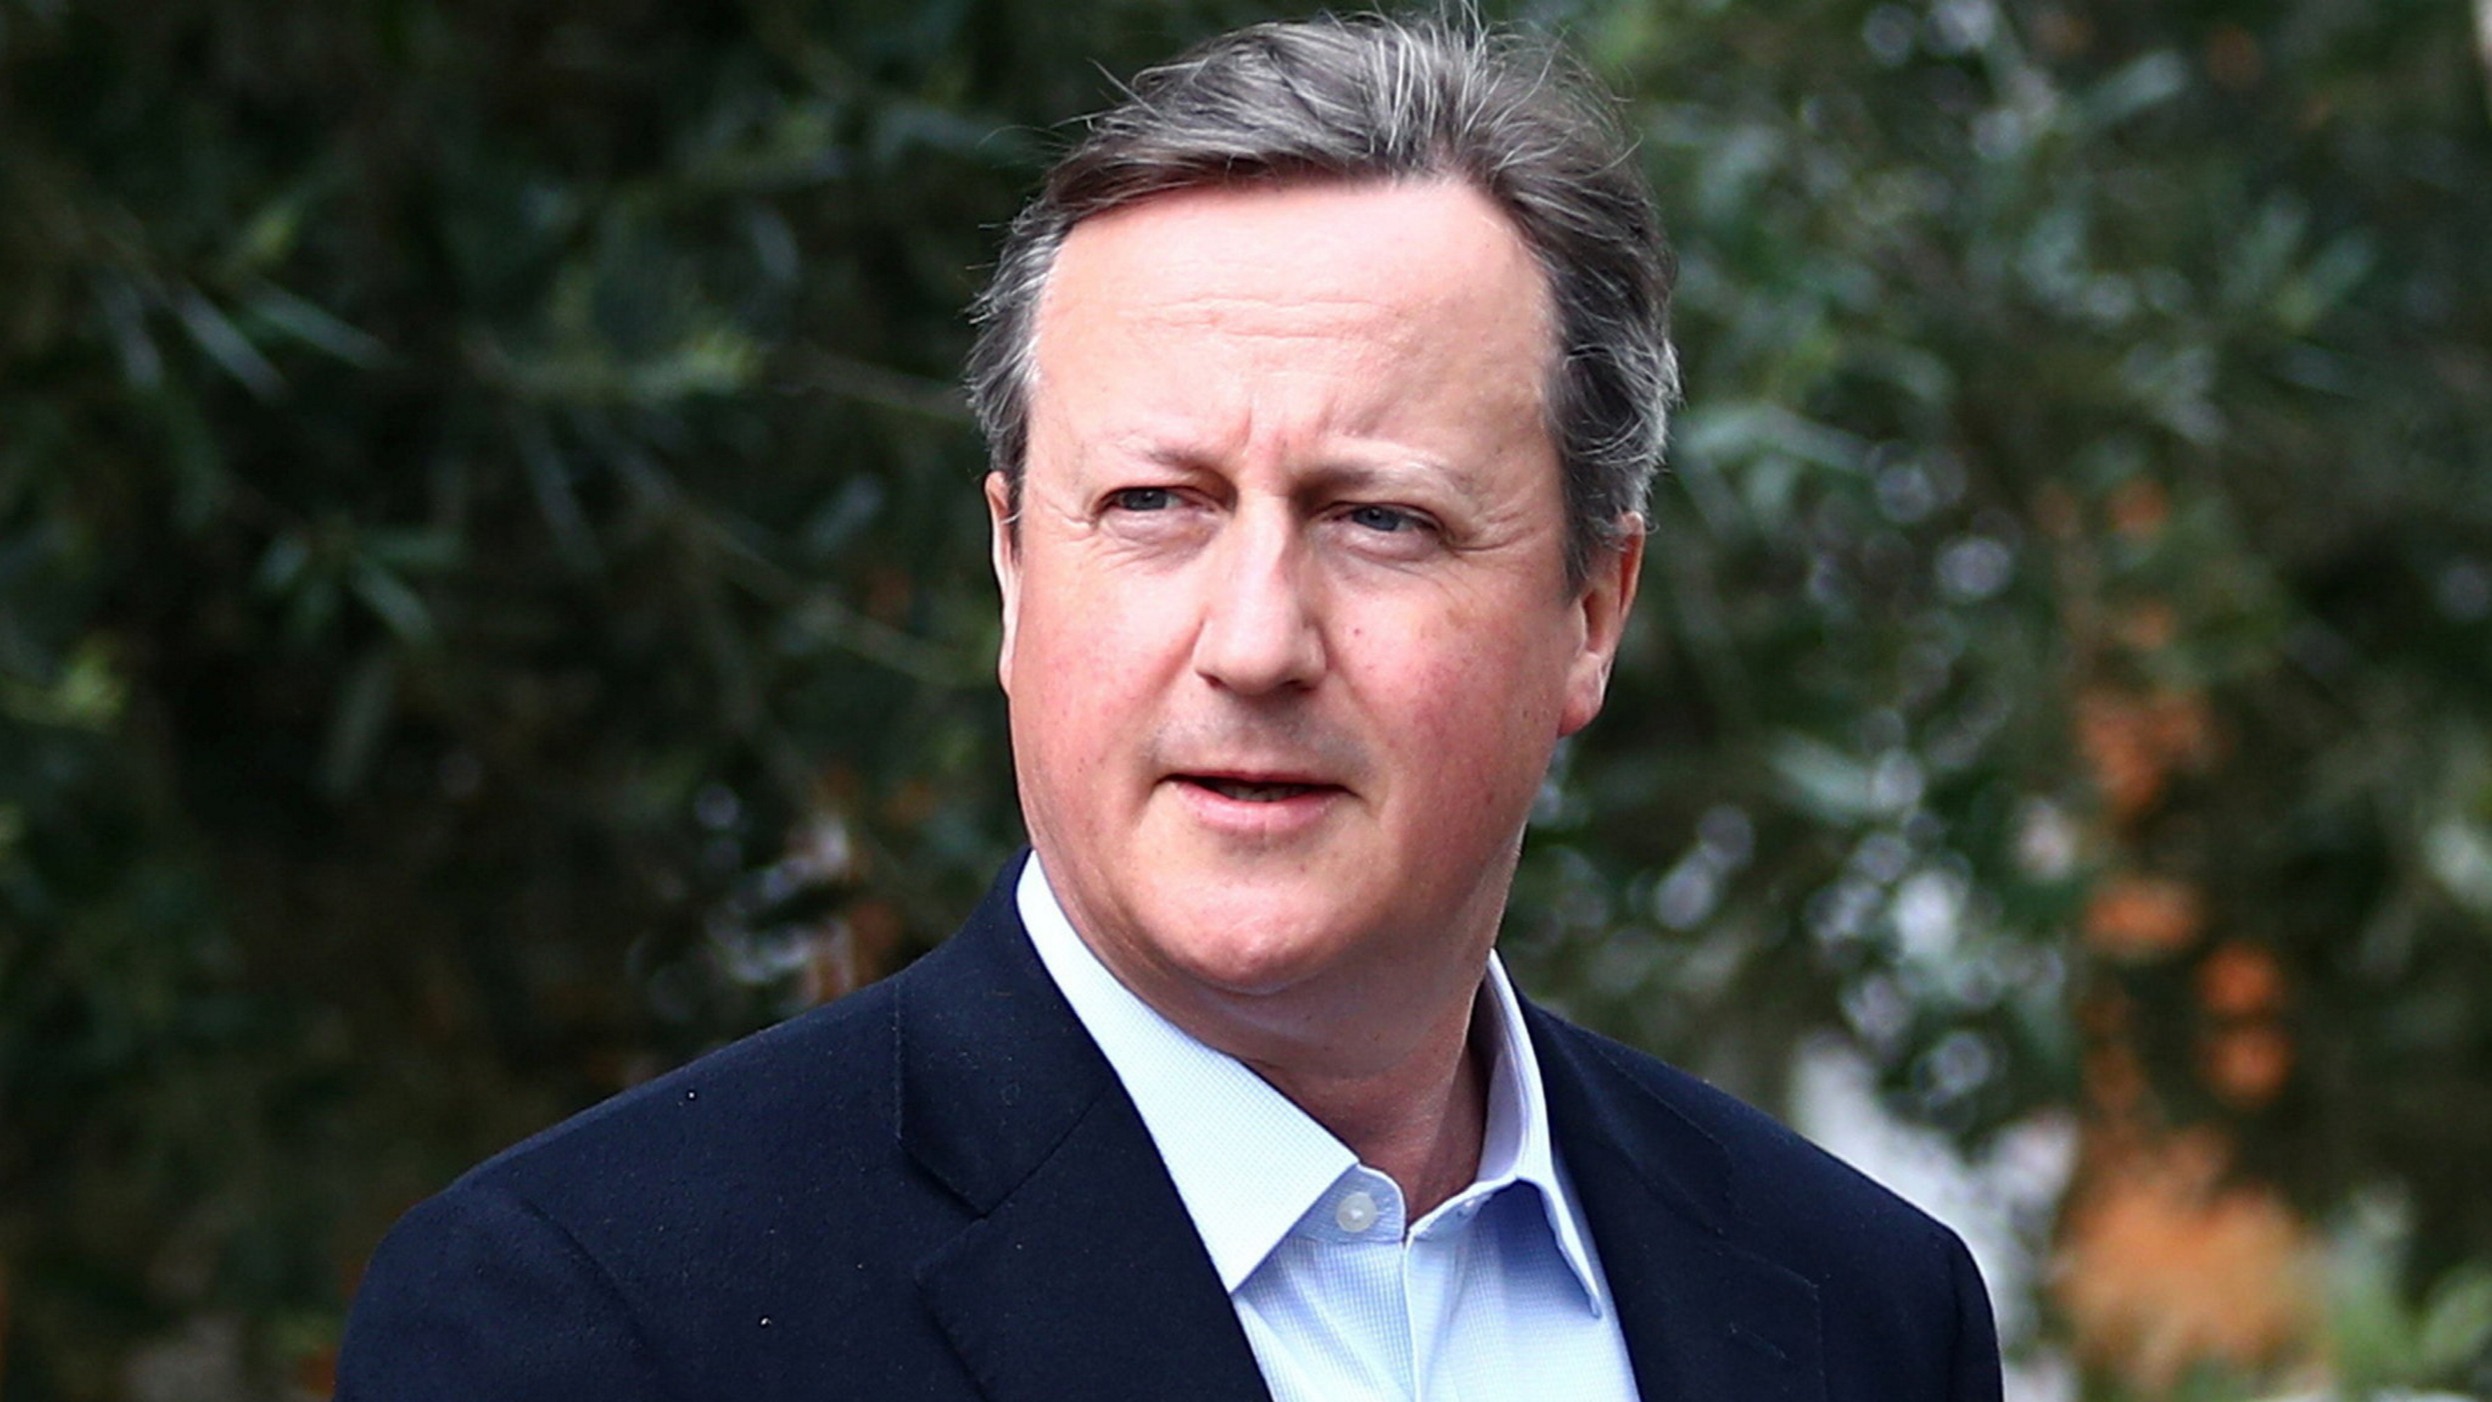 David Cameron lands teaching job at Abu Dhabi university | Financial Times